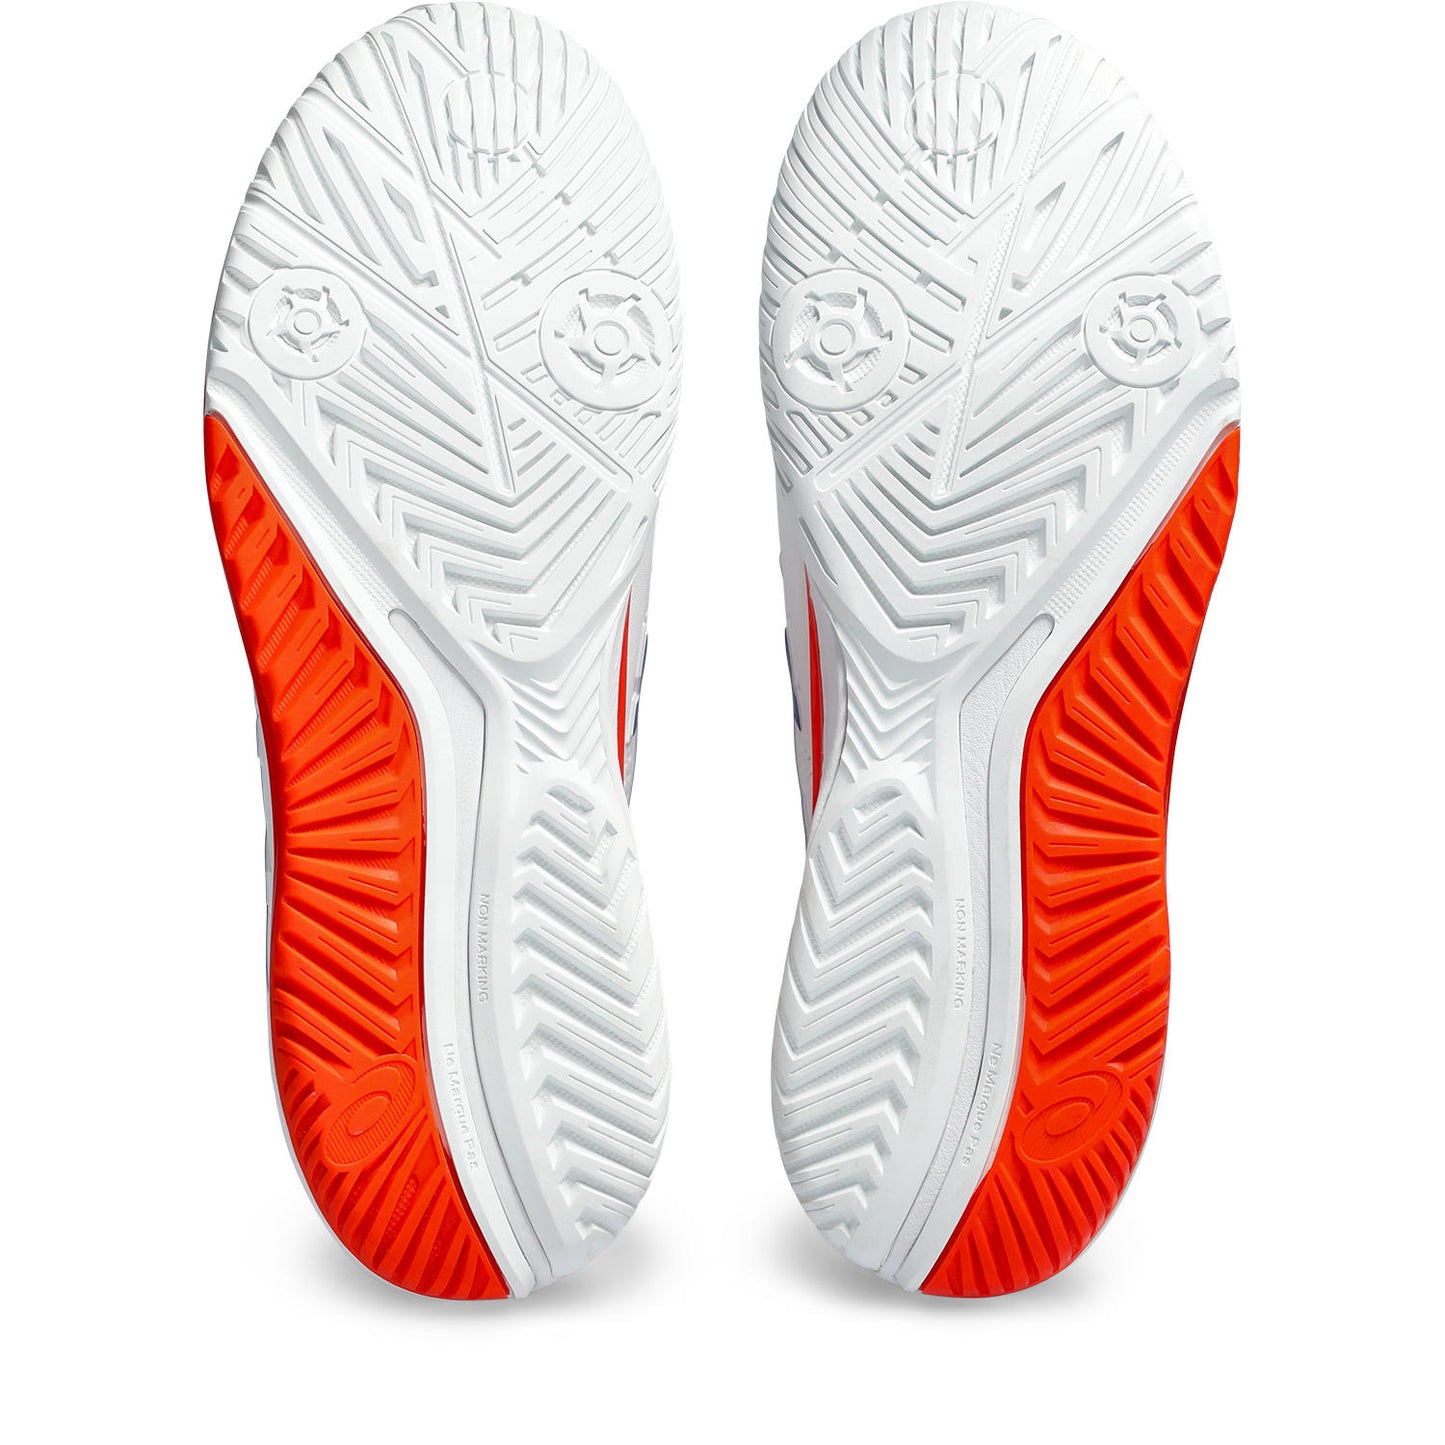 Asics Gel Resolution 9 Men tennis shoes 330.102 White/Blue/Orange